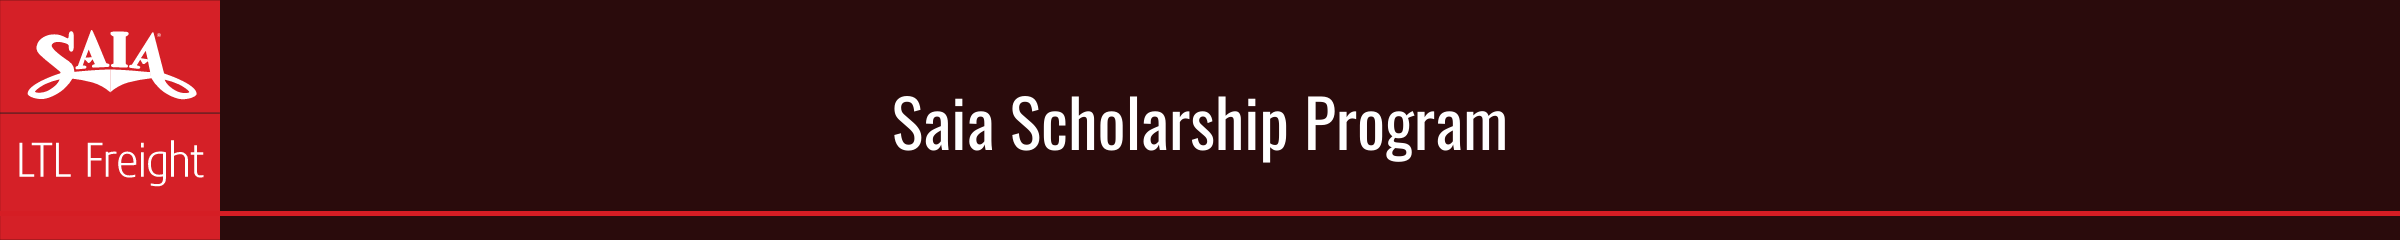 Saia Scholarship Program logo